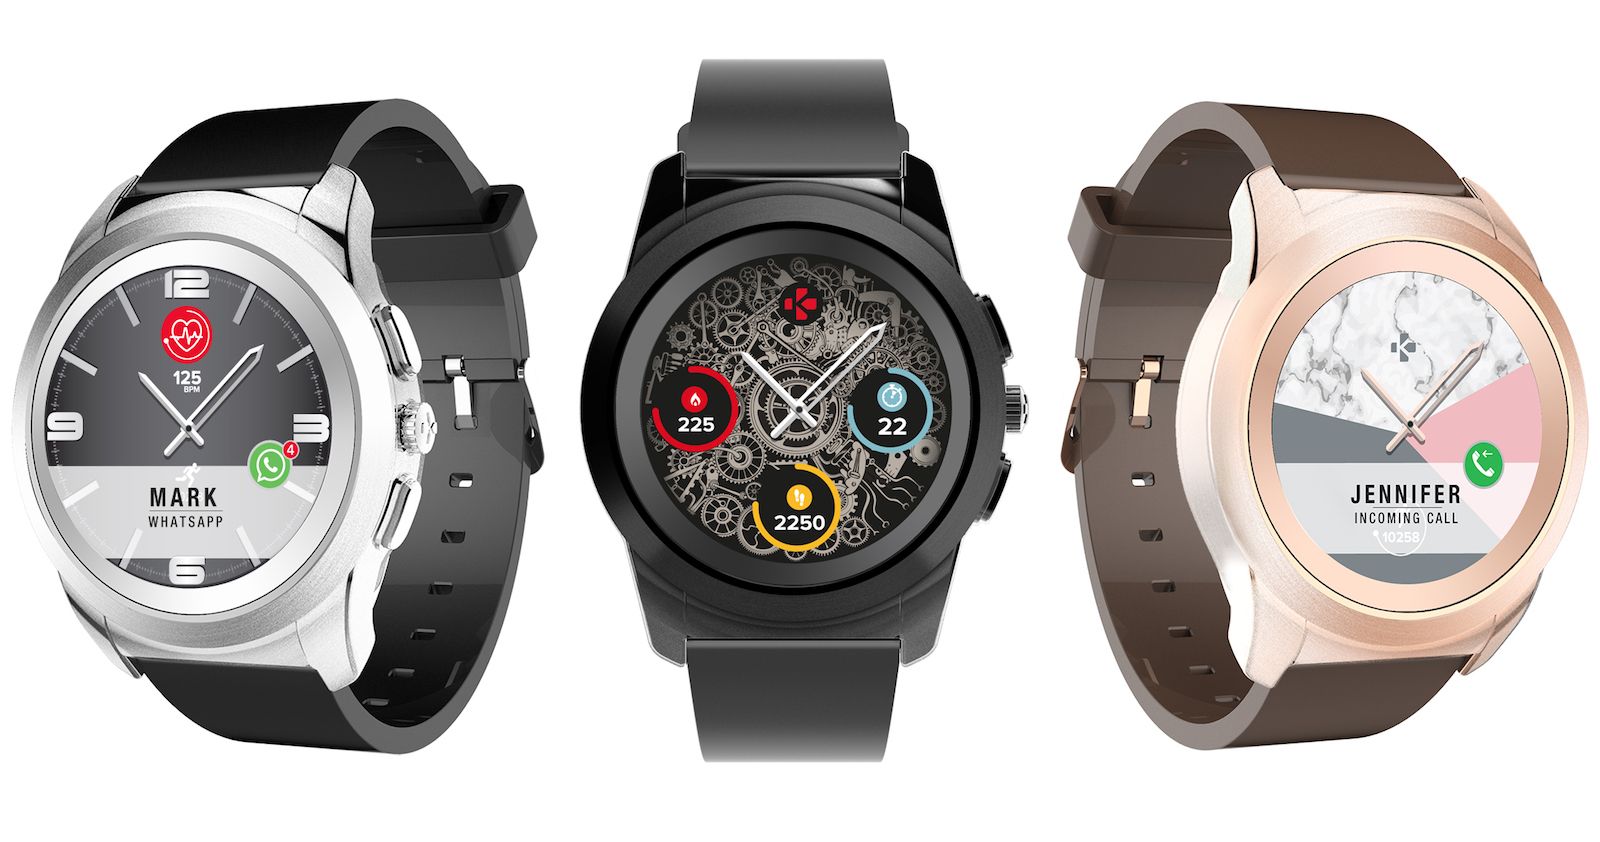 mykronoz zetime hybrid smartwatch combines analogue hands with digital watch face image 1